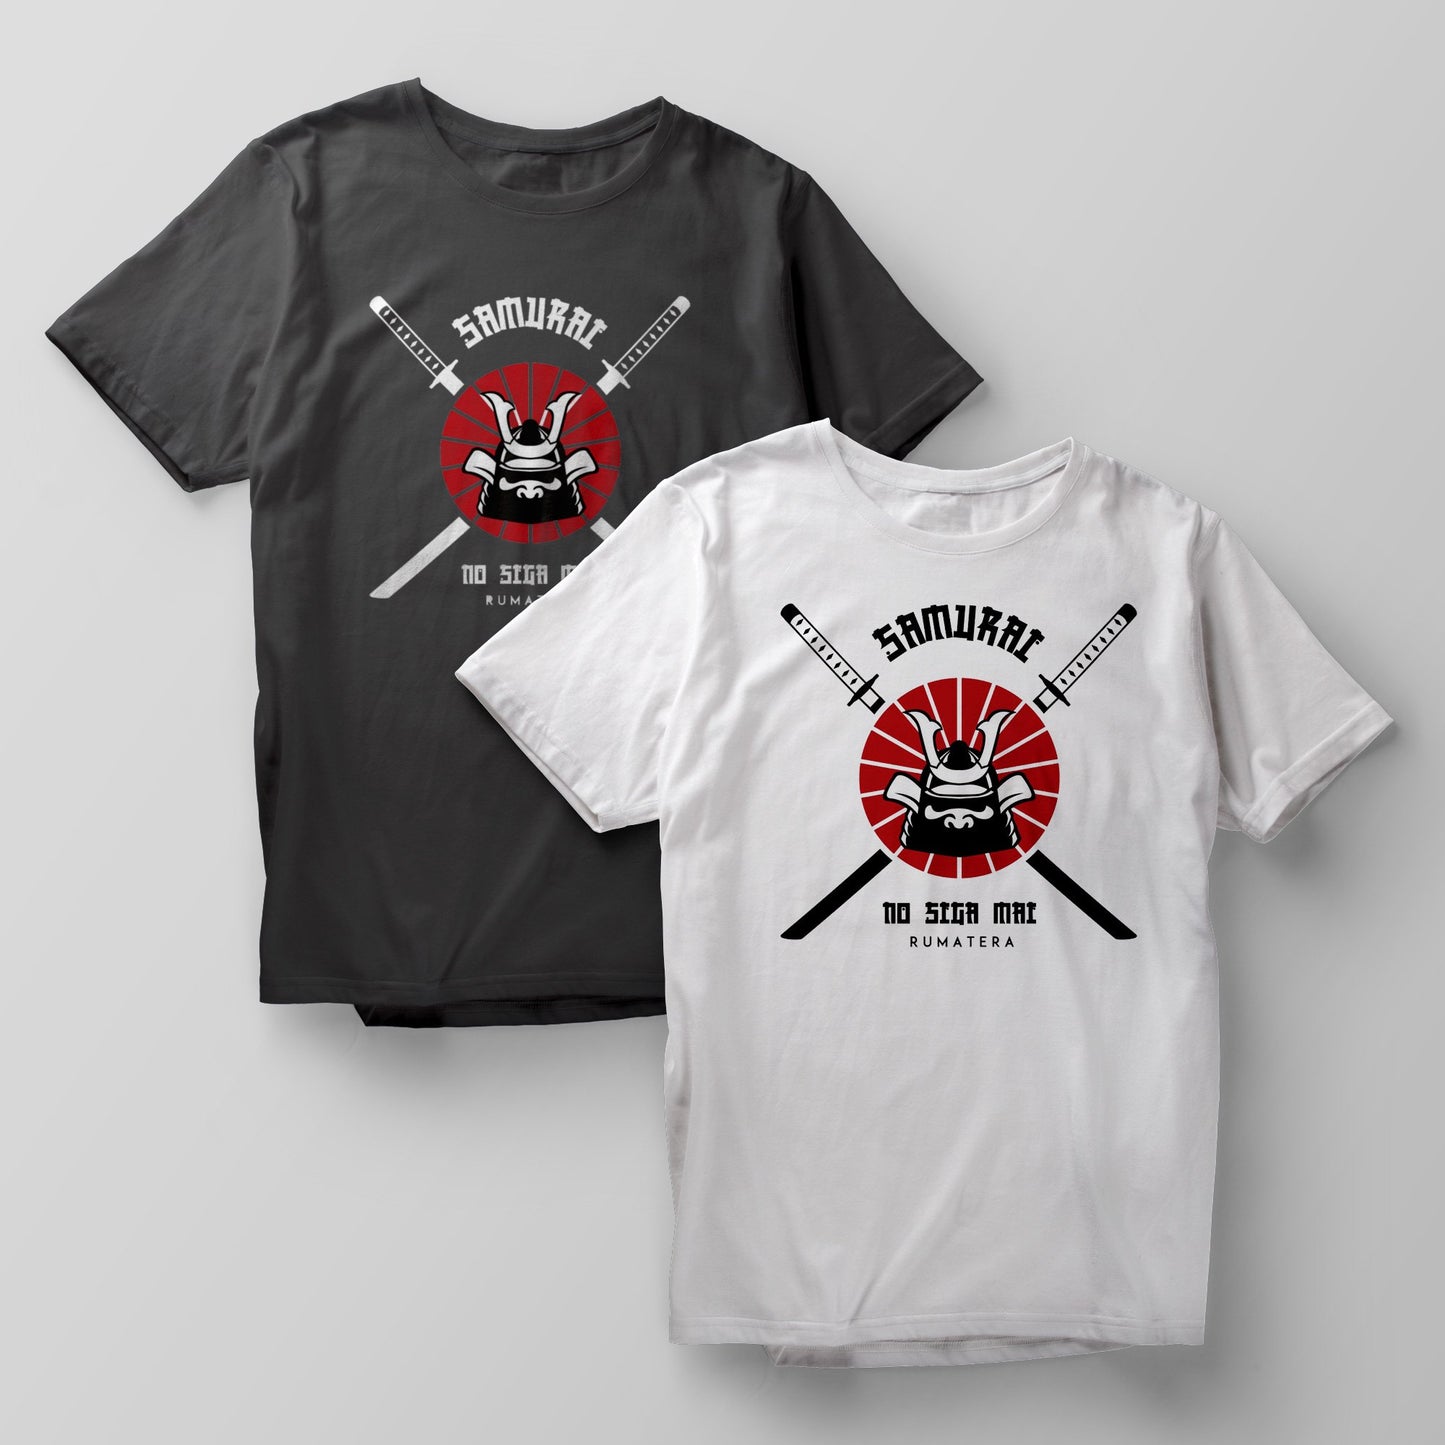 T-Shirt "Samurai no siga mai"